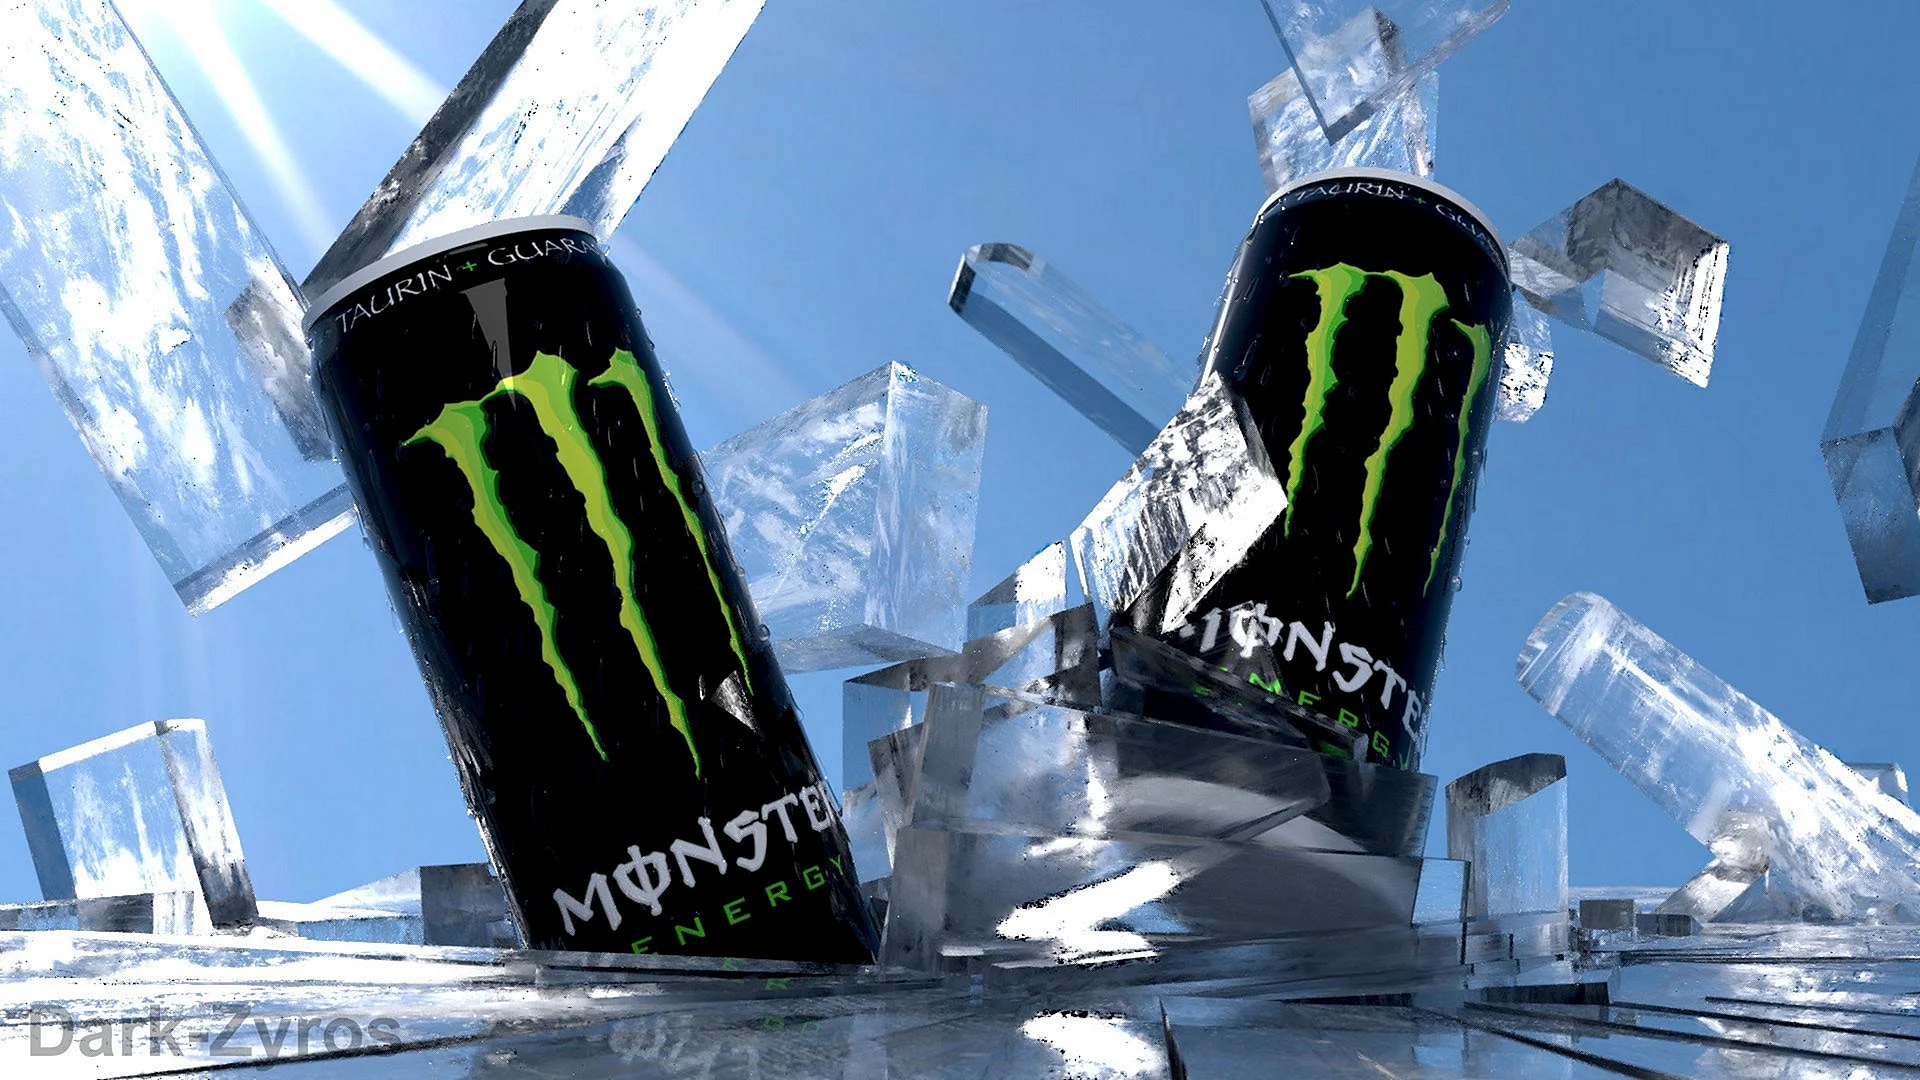 Энергетический напиток Monster Energy vr46